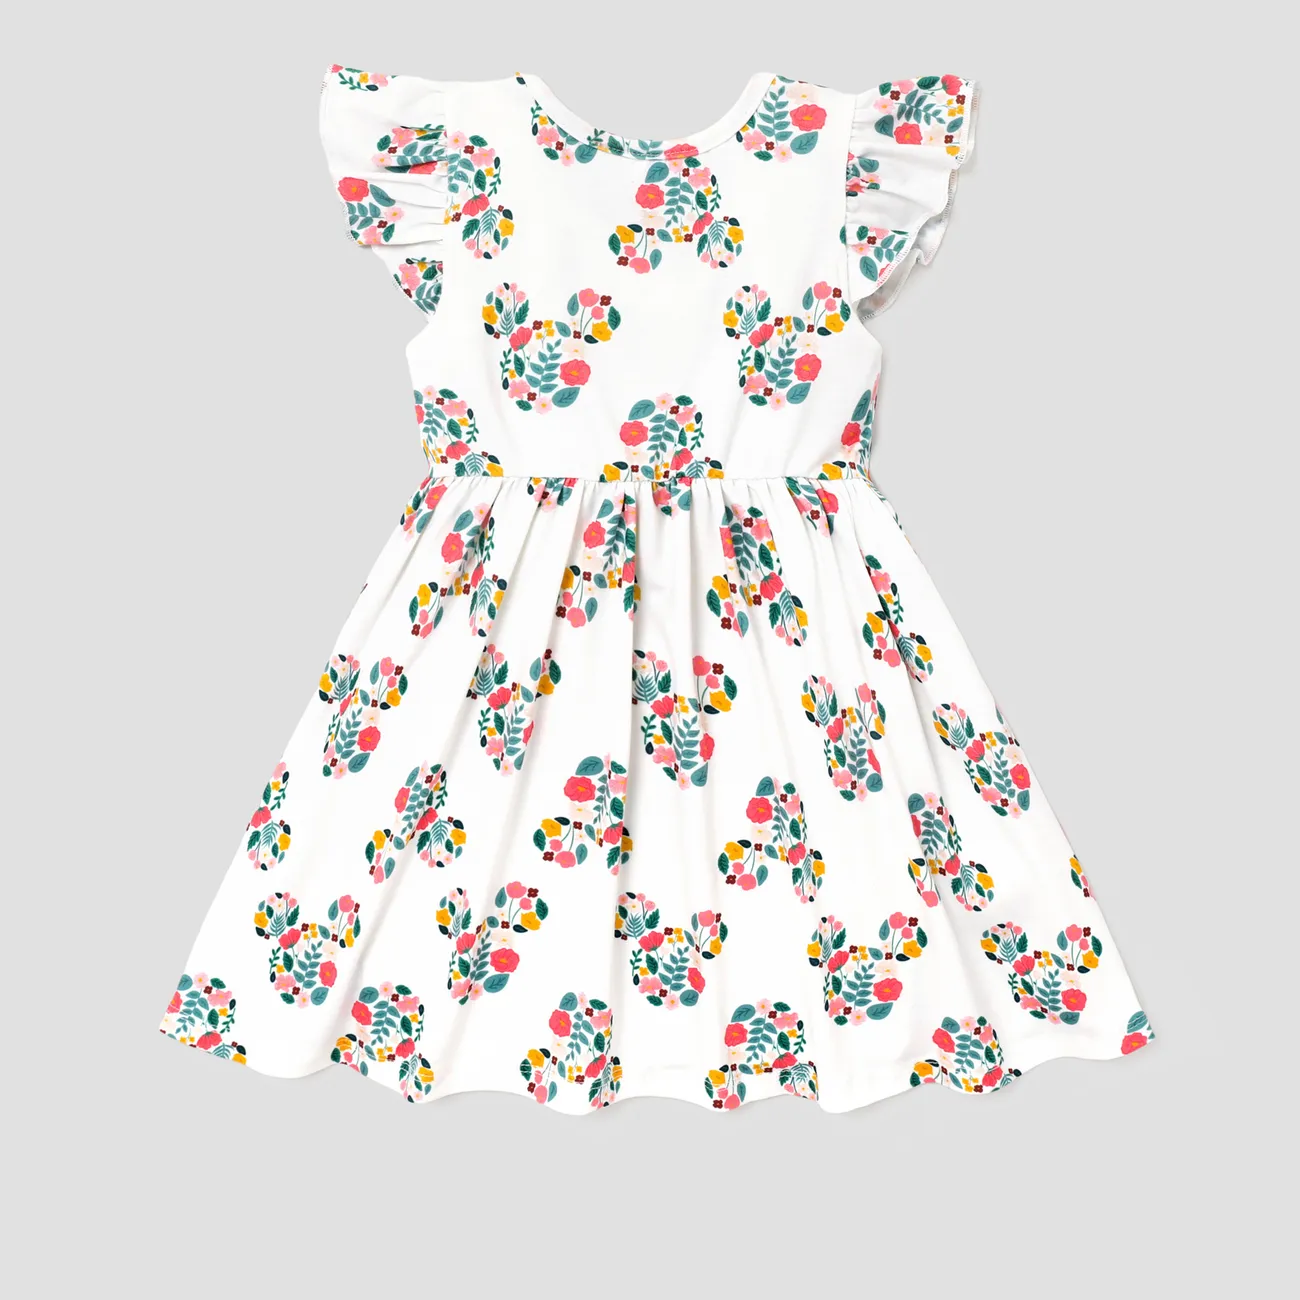 Disney Mickey and Friends Toddler Girl Naia™ Character Print Ruffled Sleeveless Dress White big image 1